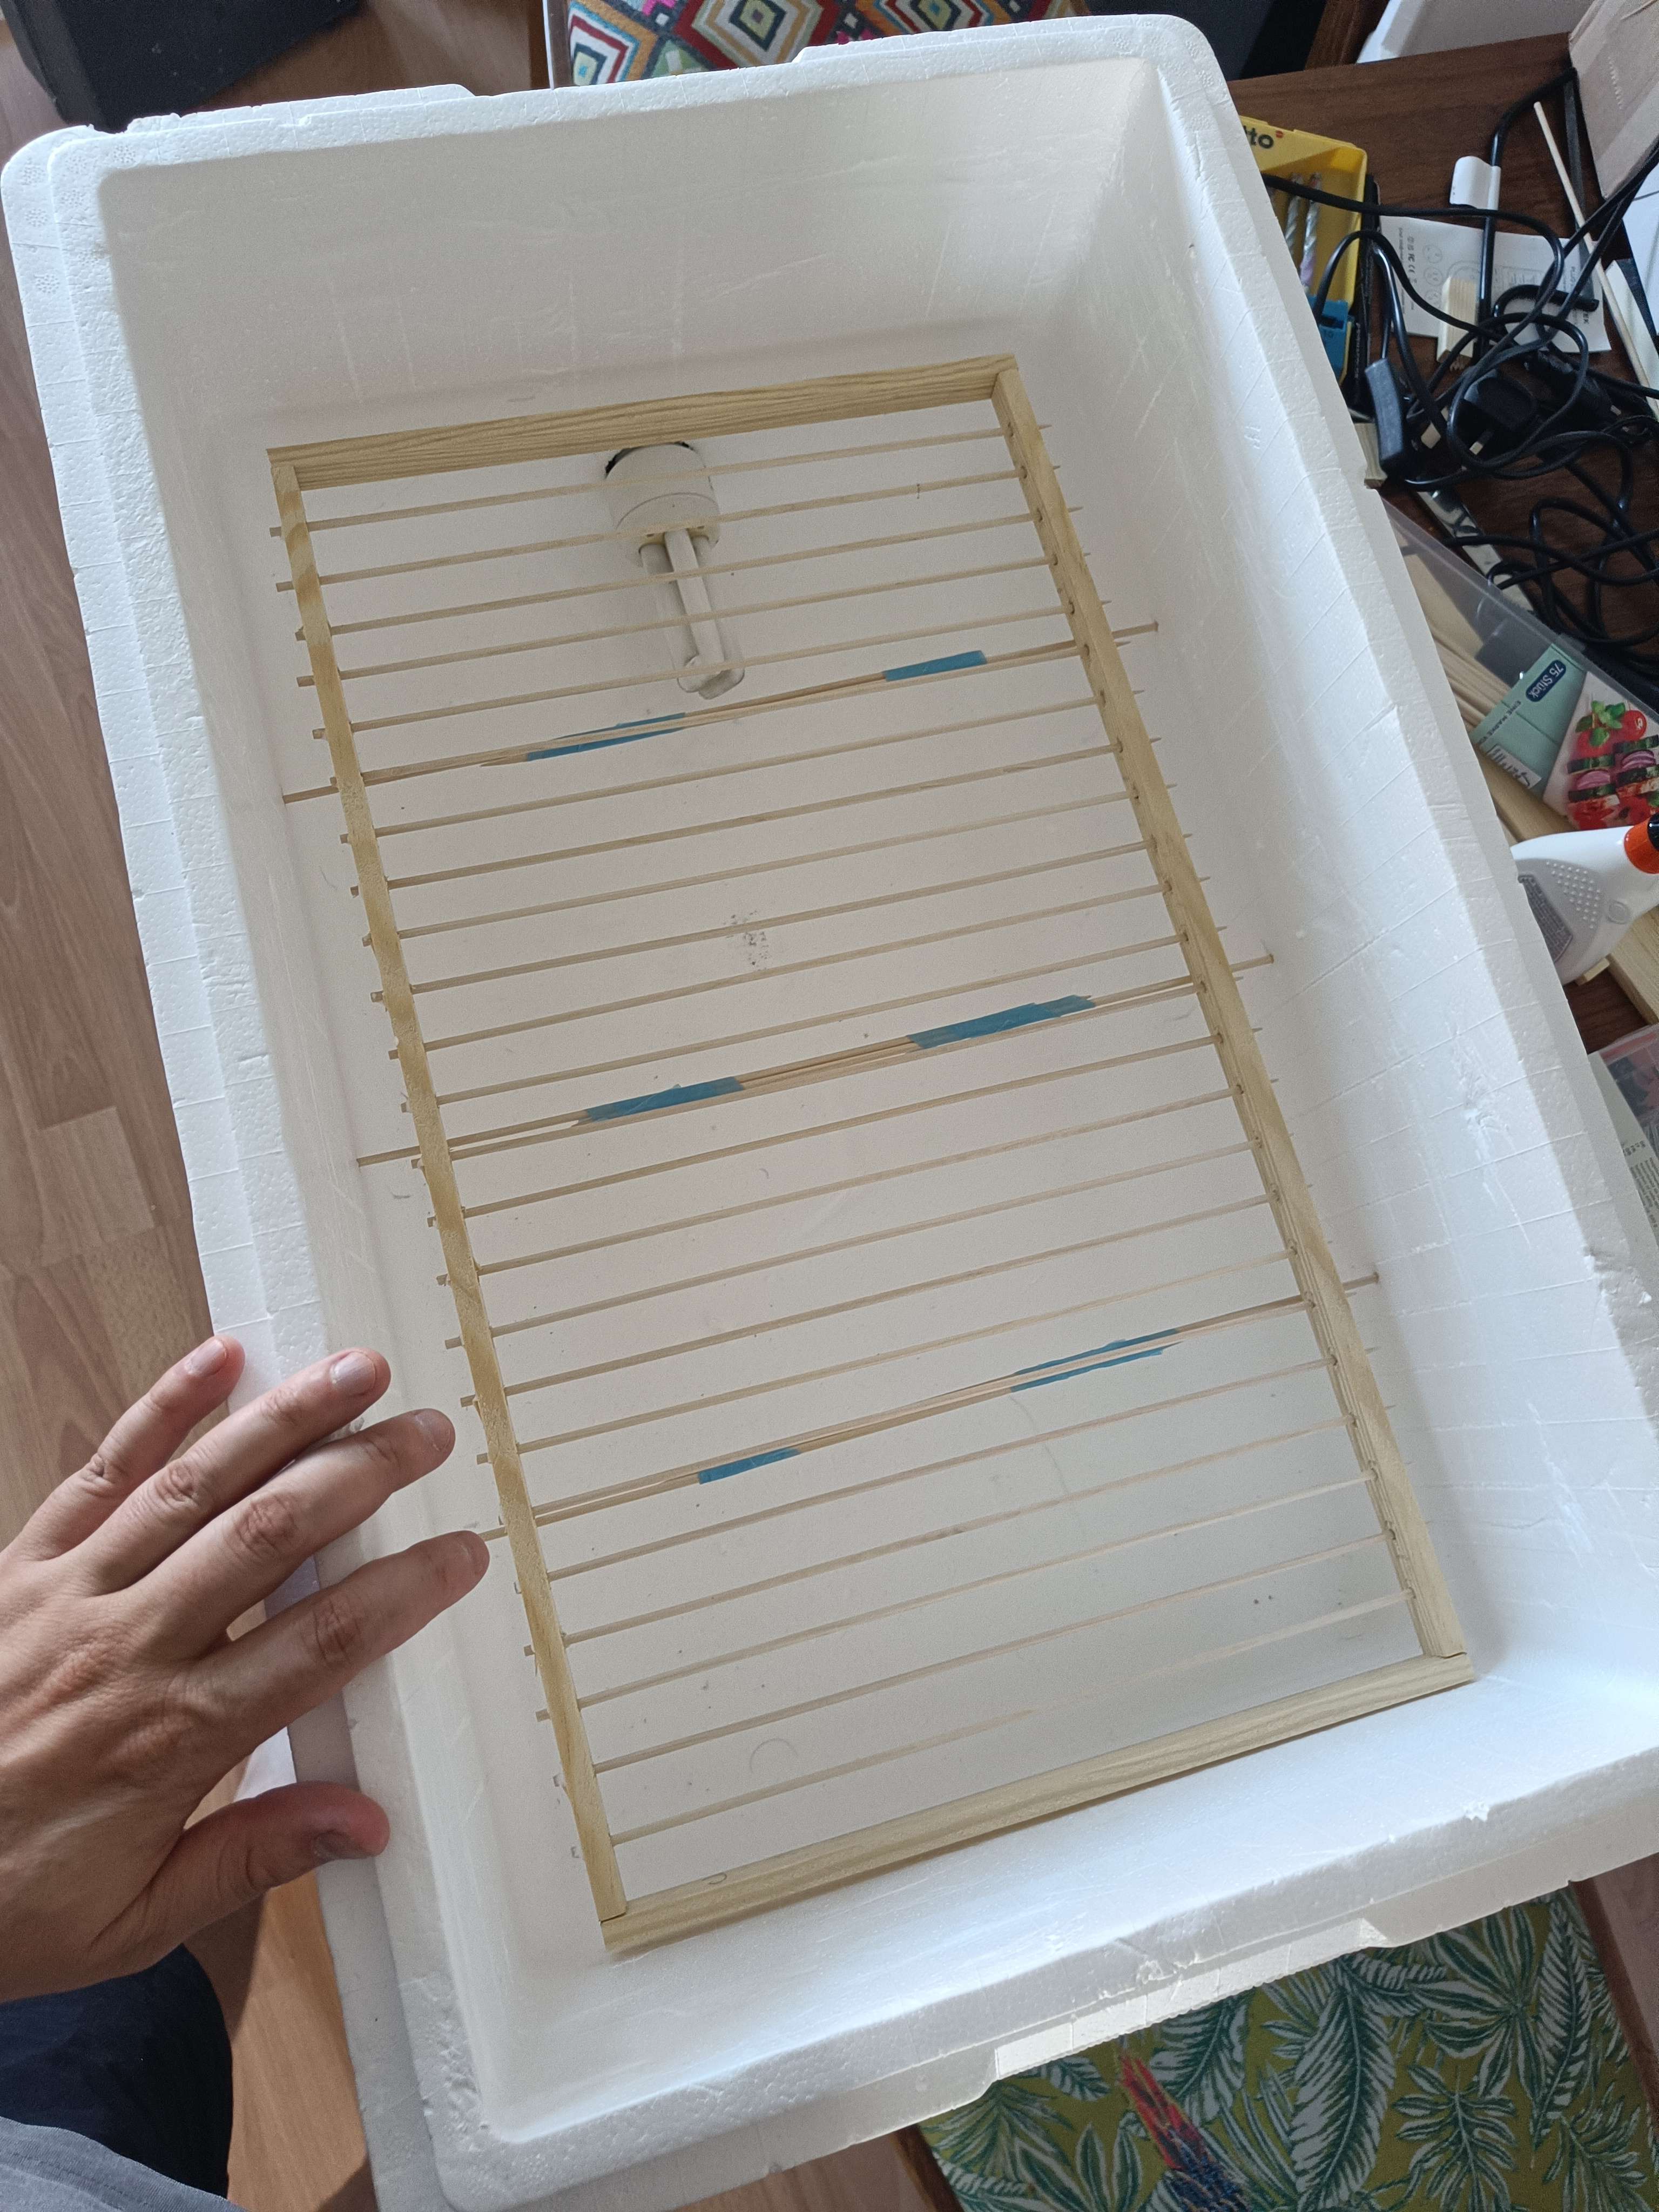 photo of styrofoam incubator box with wooden rack